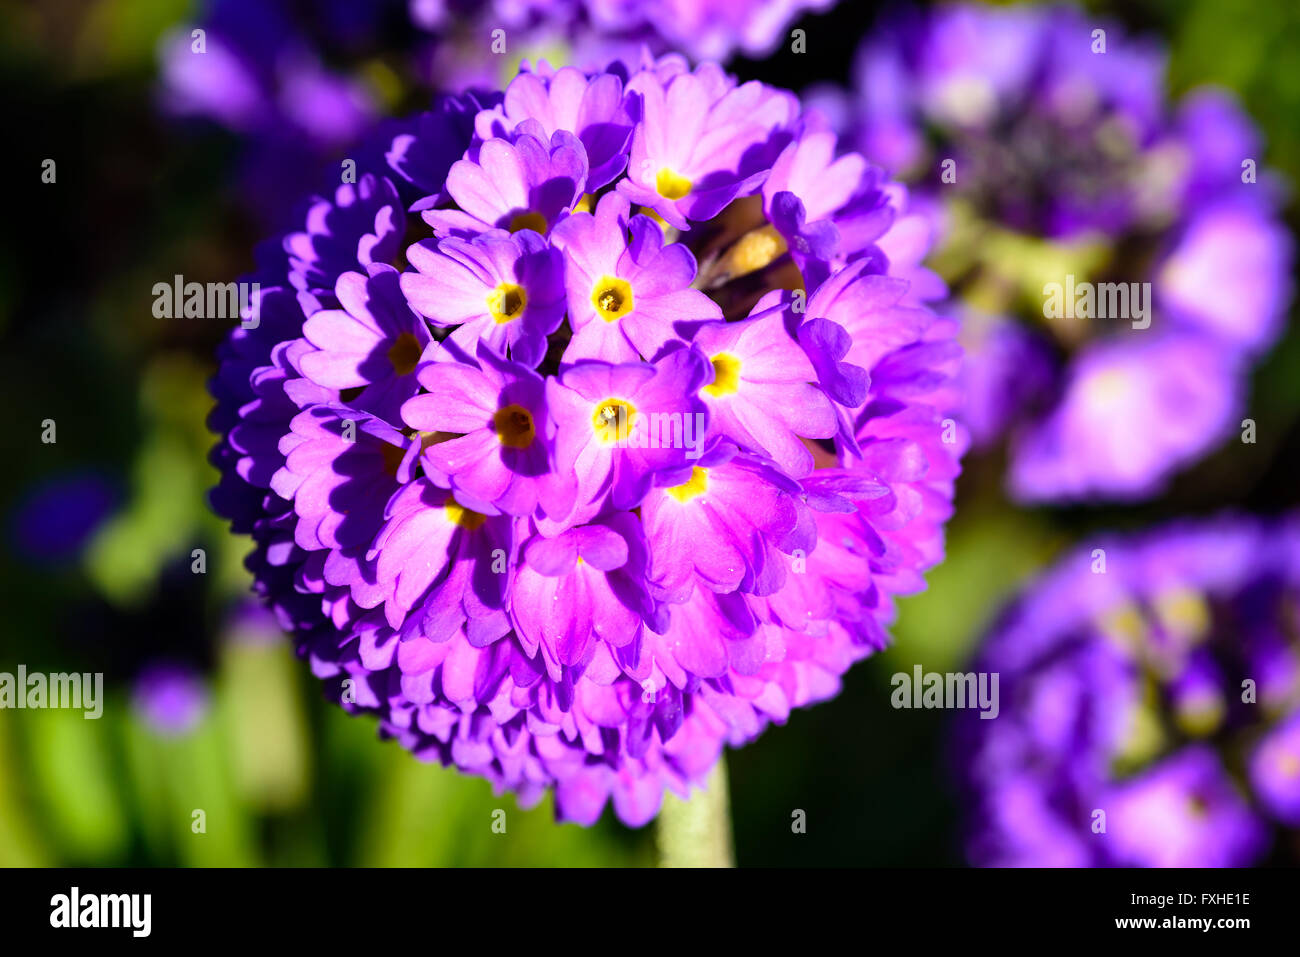 Primula denticulate, or drumstick primrose, a beautiful purple flowering plant growing in moist alpine regions. Stock Photo